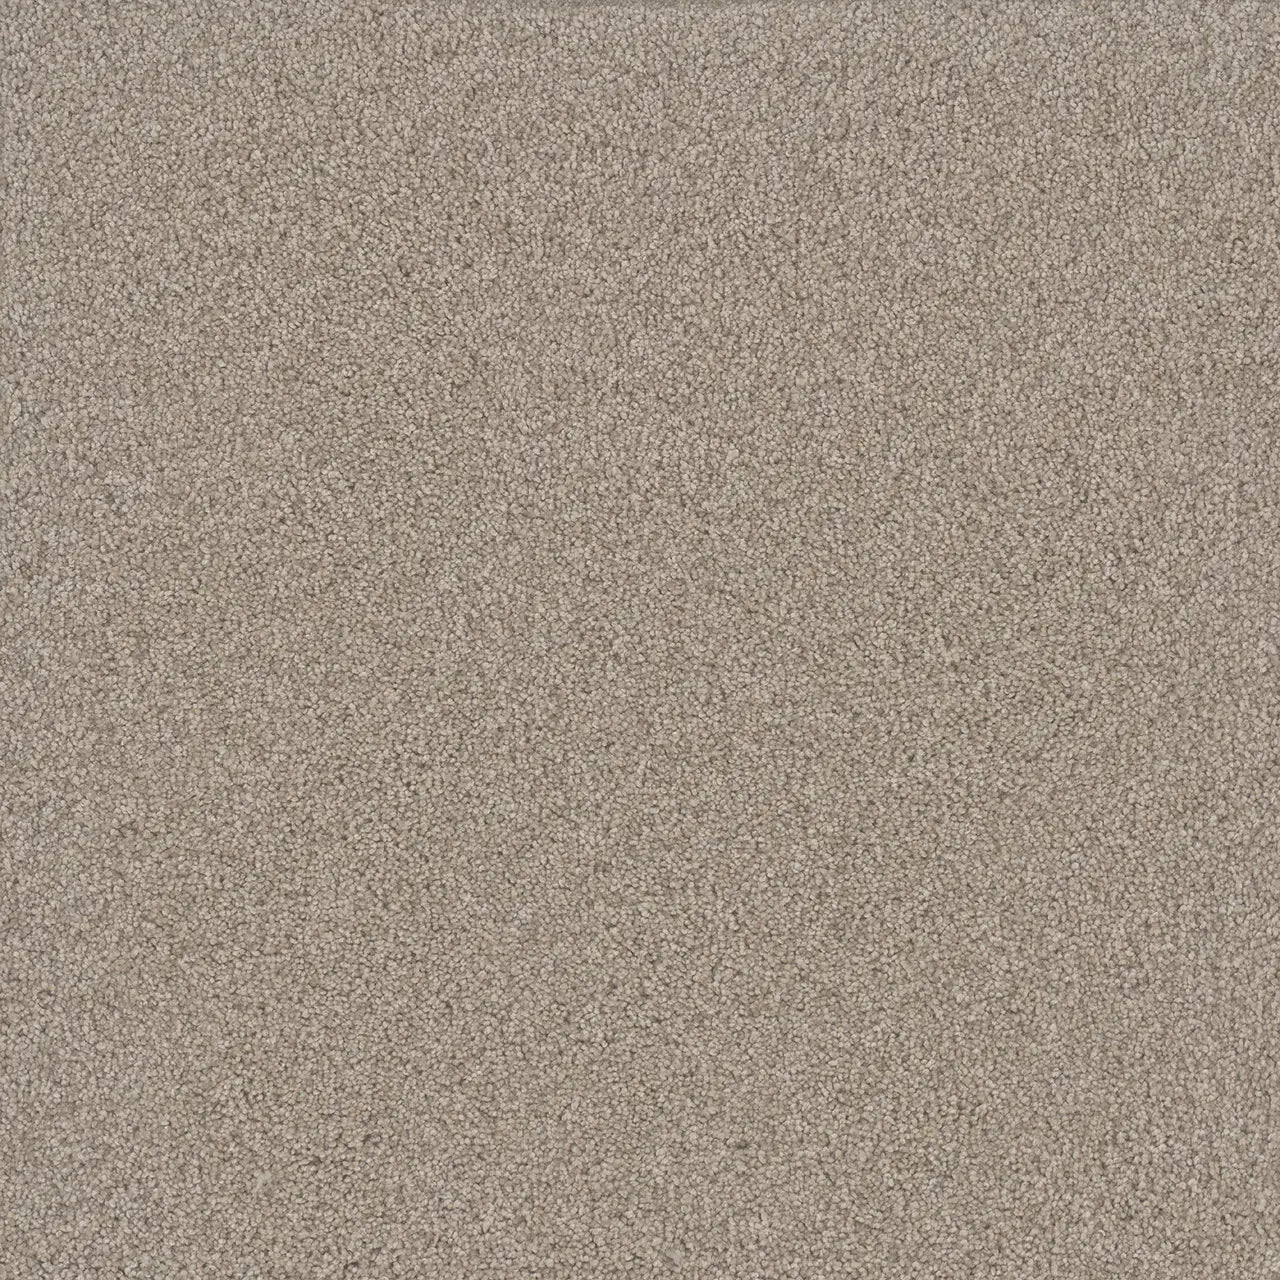 Nimbus, Gold Standard III, Carpet by Dreamweaver, Calhoun's Flooring Springfield, IL